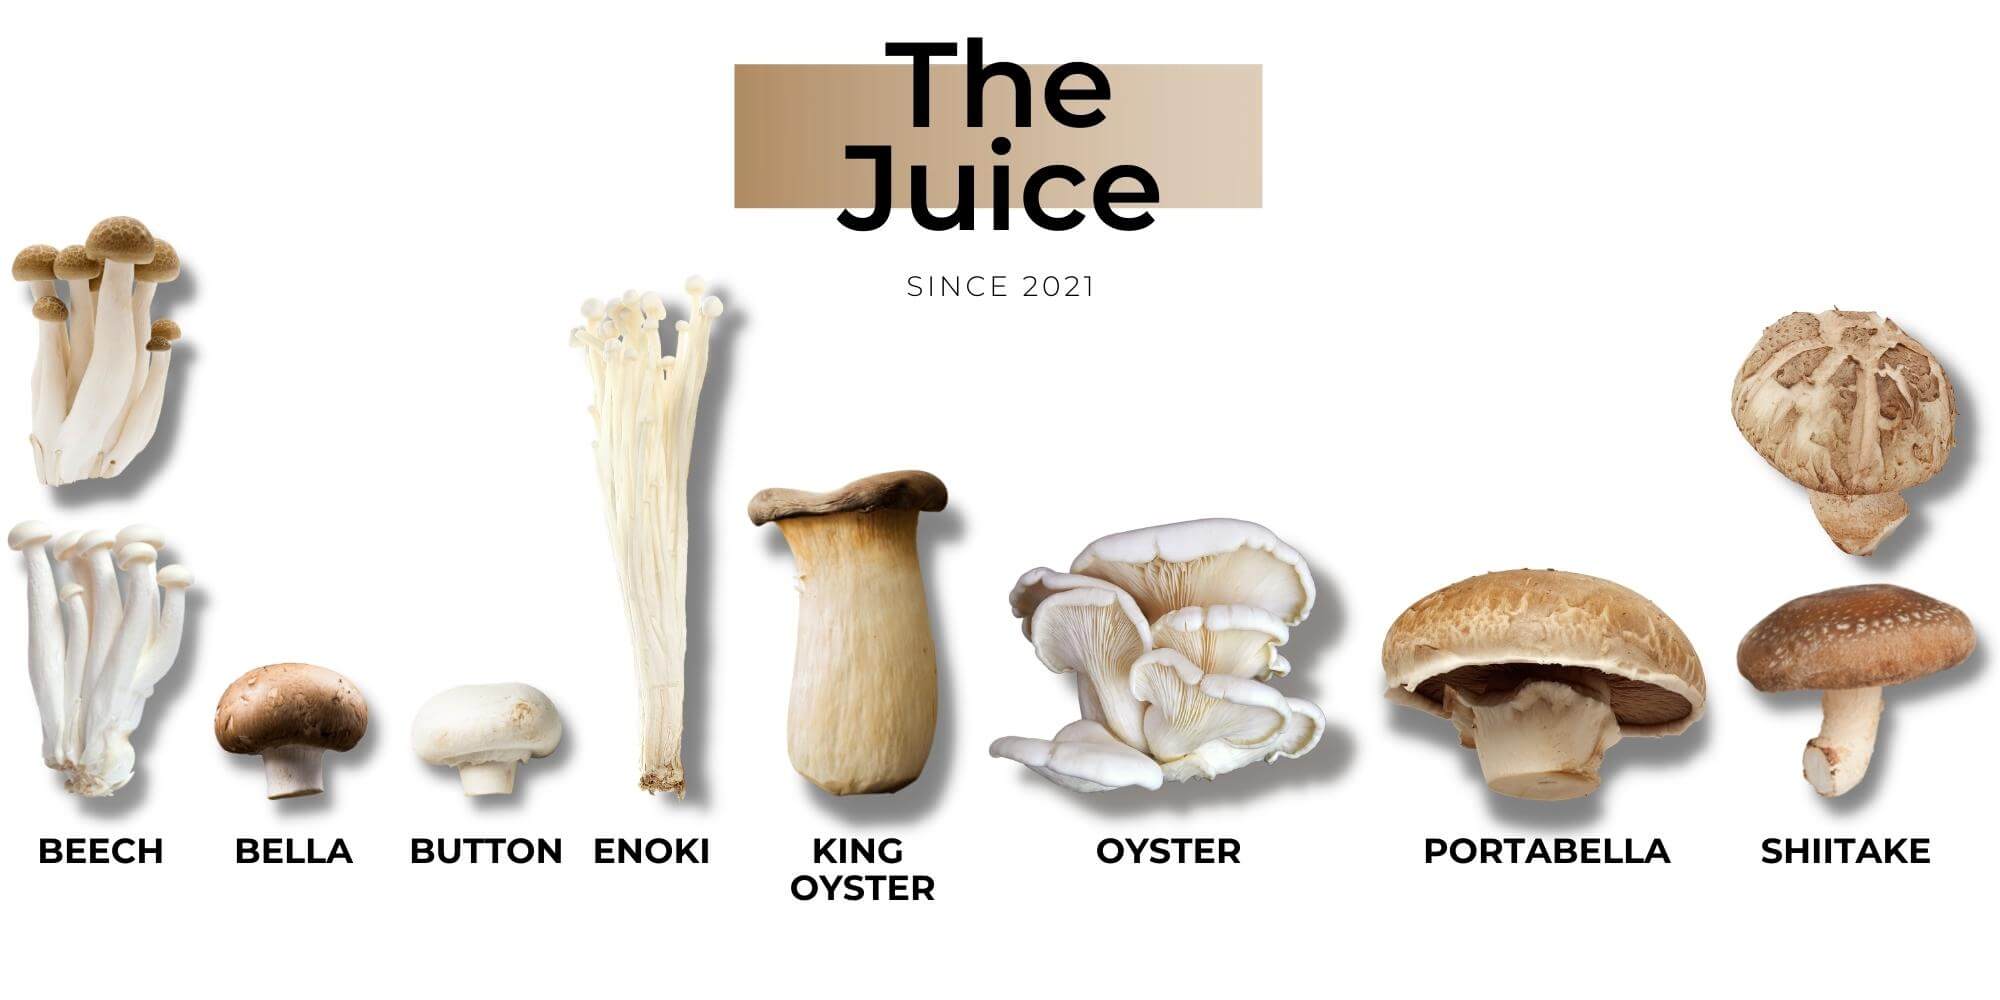 King Oyster Mushroom and Shimeji Mushroom and Shitake Mushroom O